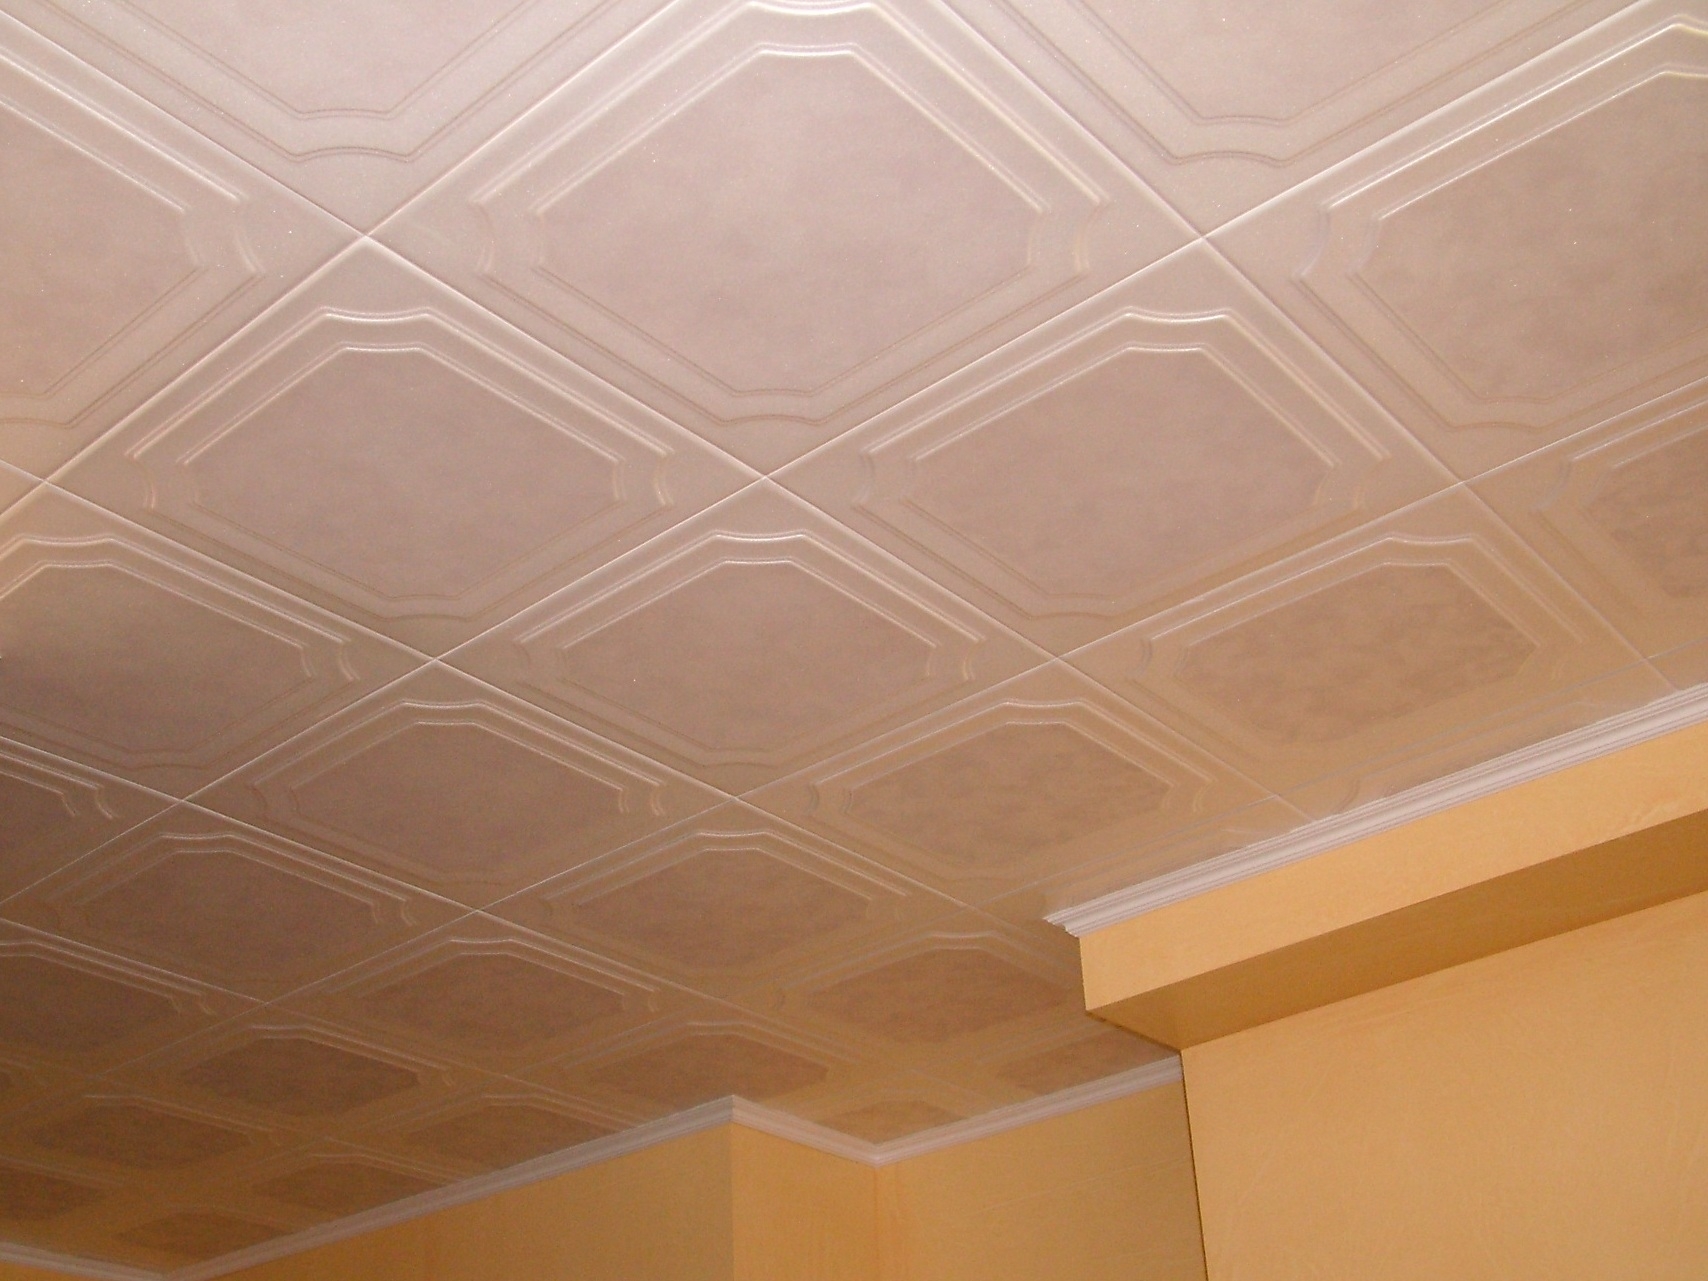 Patterned Polystyrene Ceiling Tiles